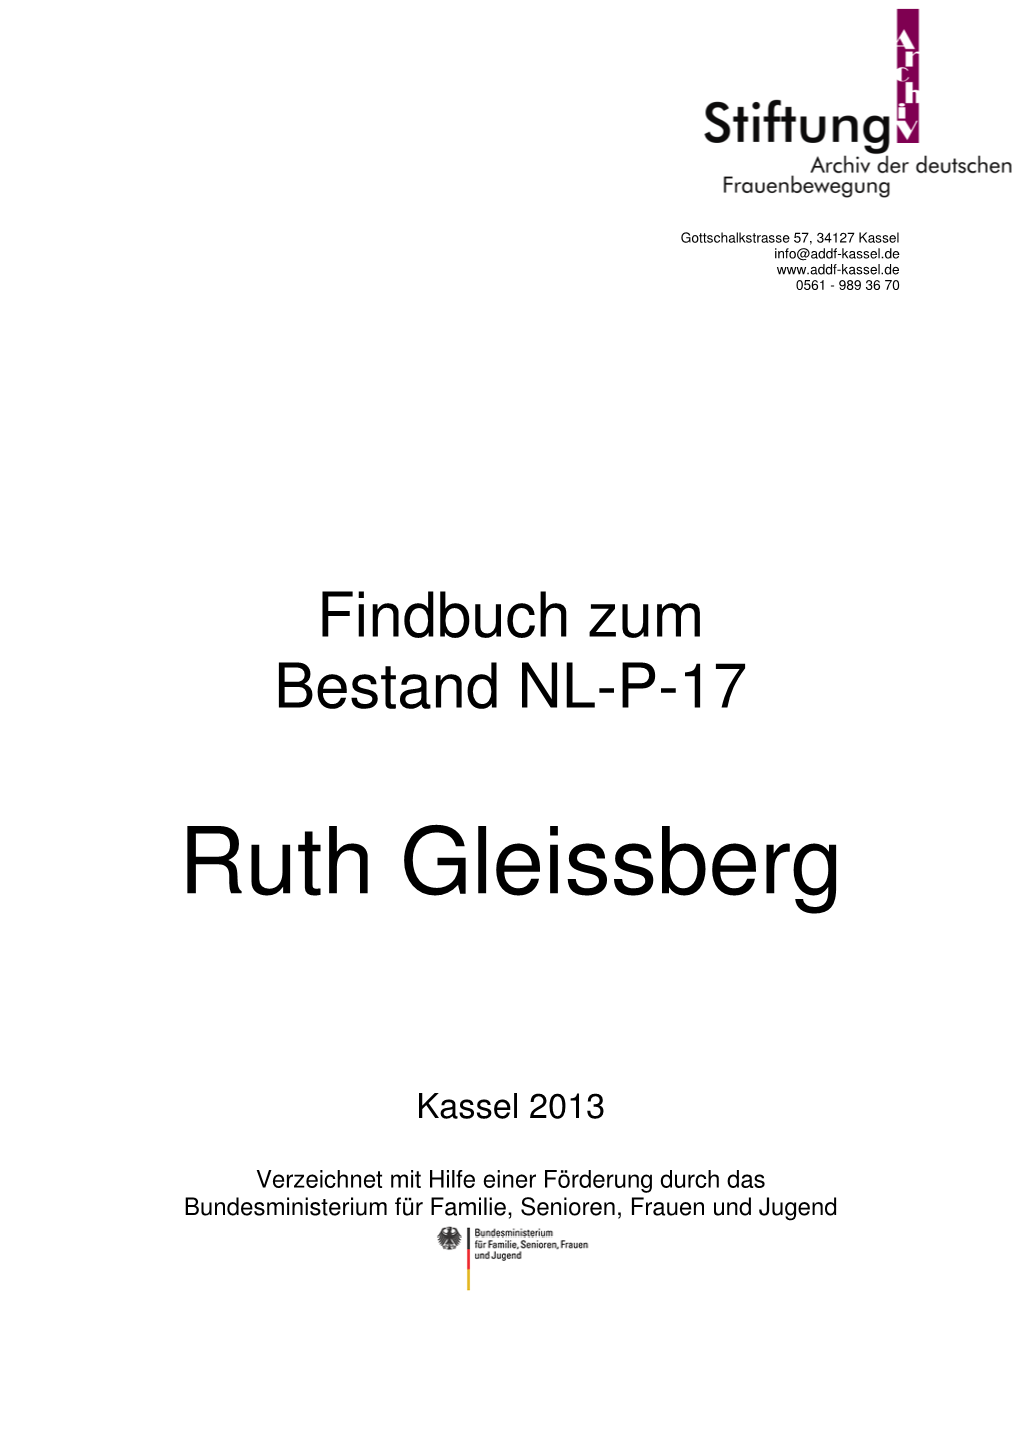 Ruth Gleissberg